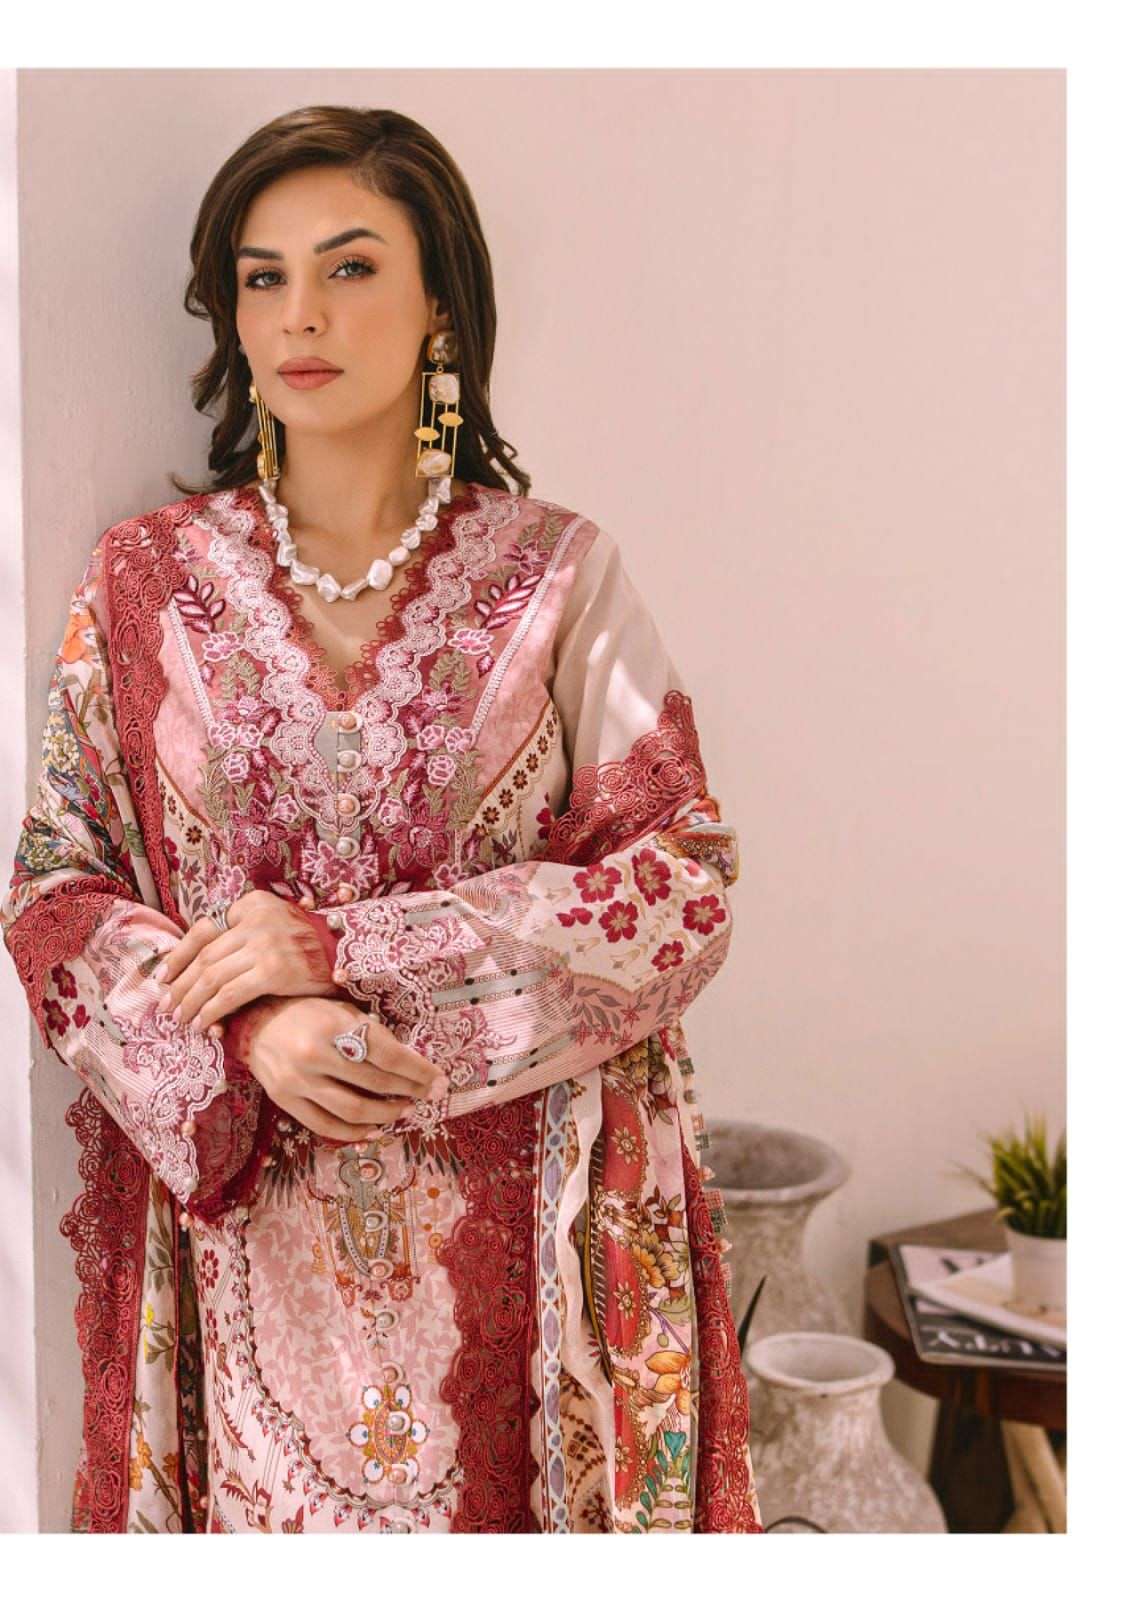 keval alija b vol-24 24001-24006 series designer fancy pakistani salwar kameez wholesaler surat gujarat